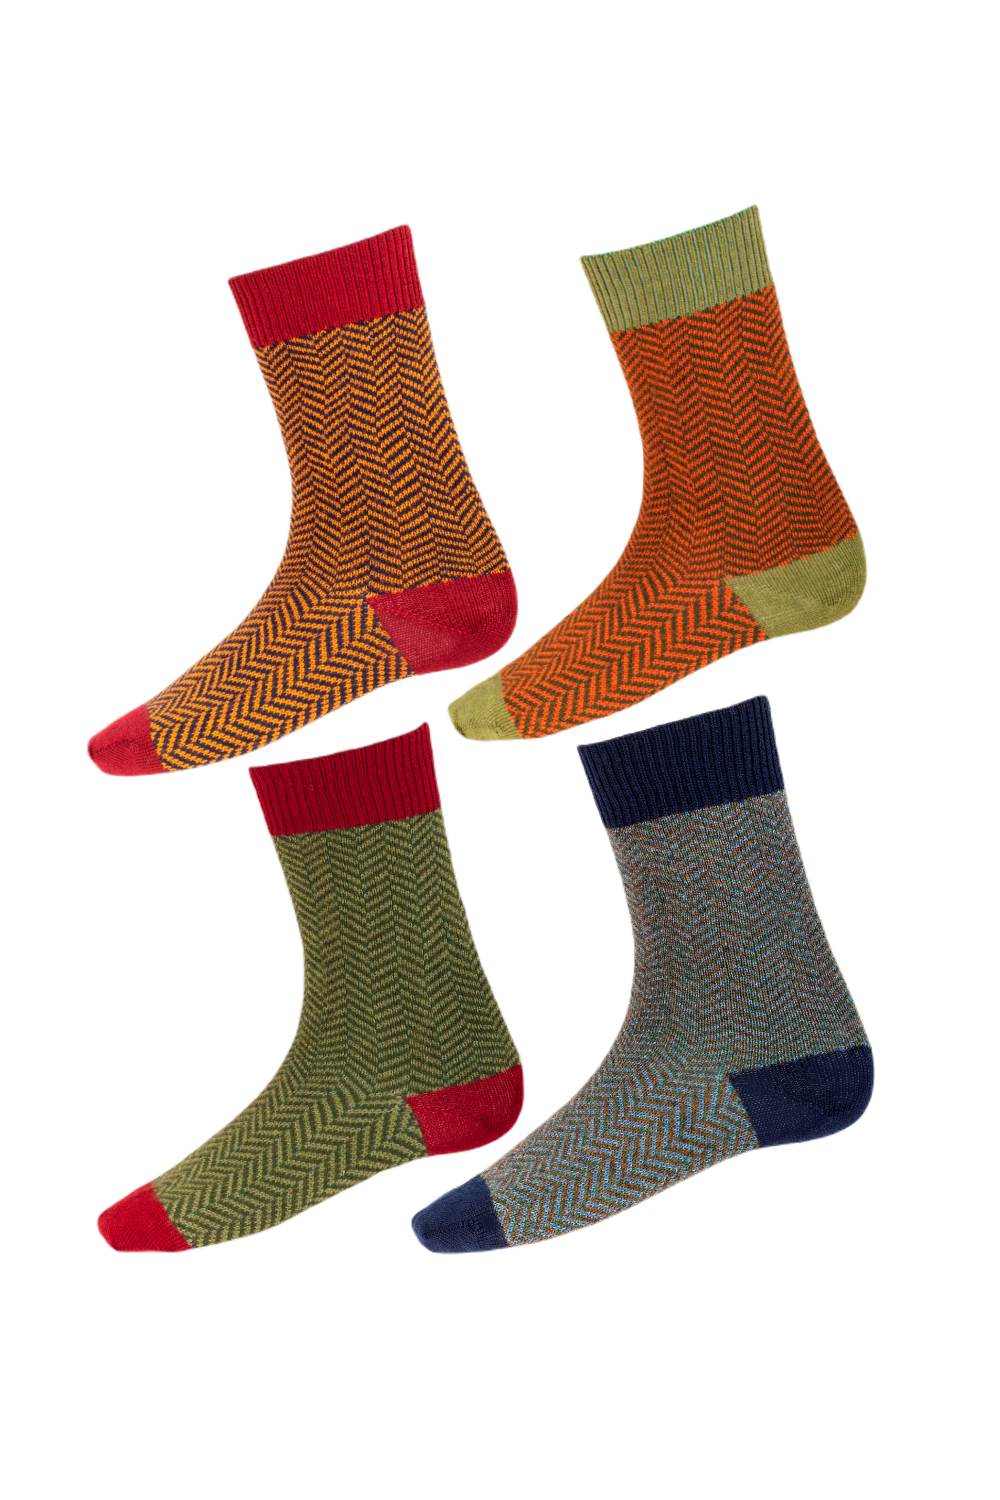 House Of Cheviot Herringbone Short Socks In Burgundy, Ivy Green, Brick Red, Navy